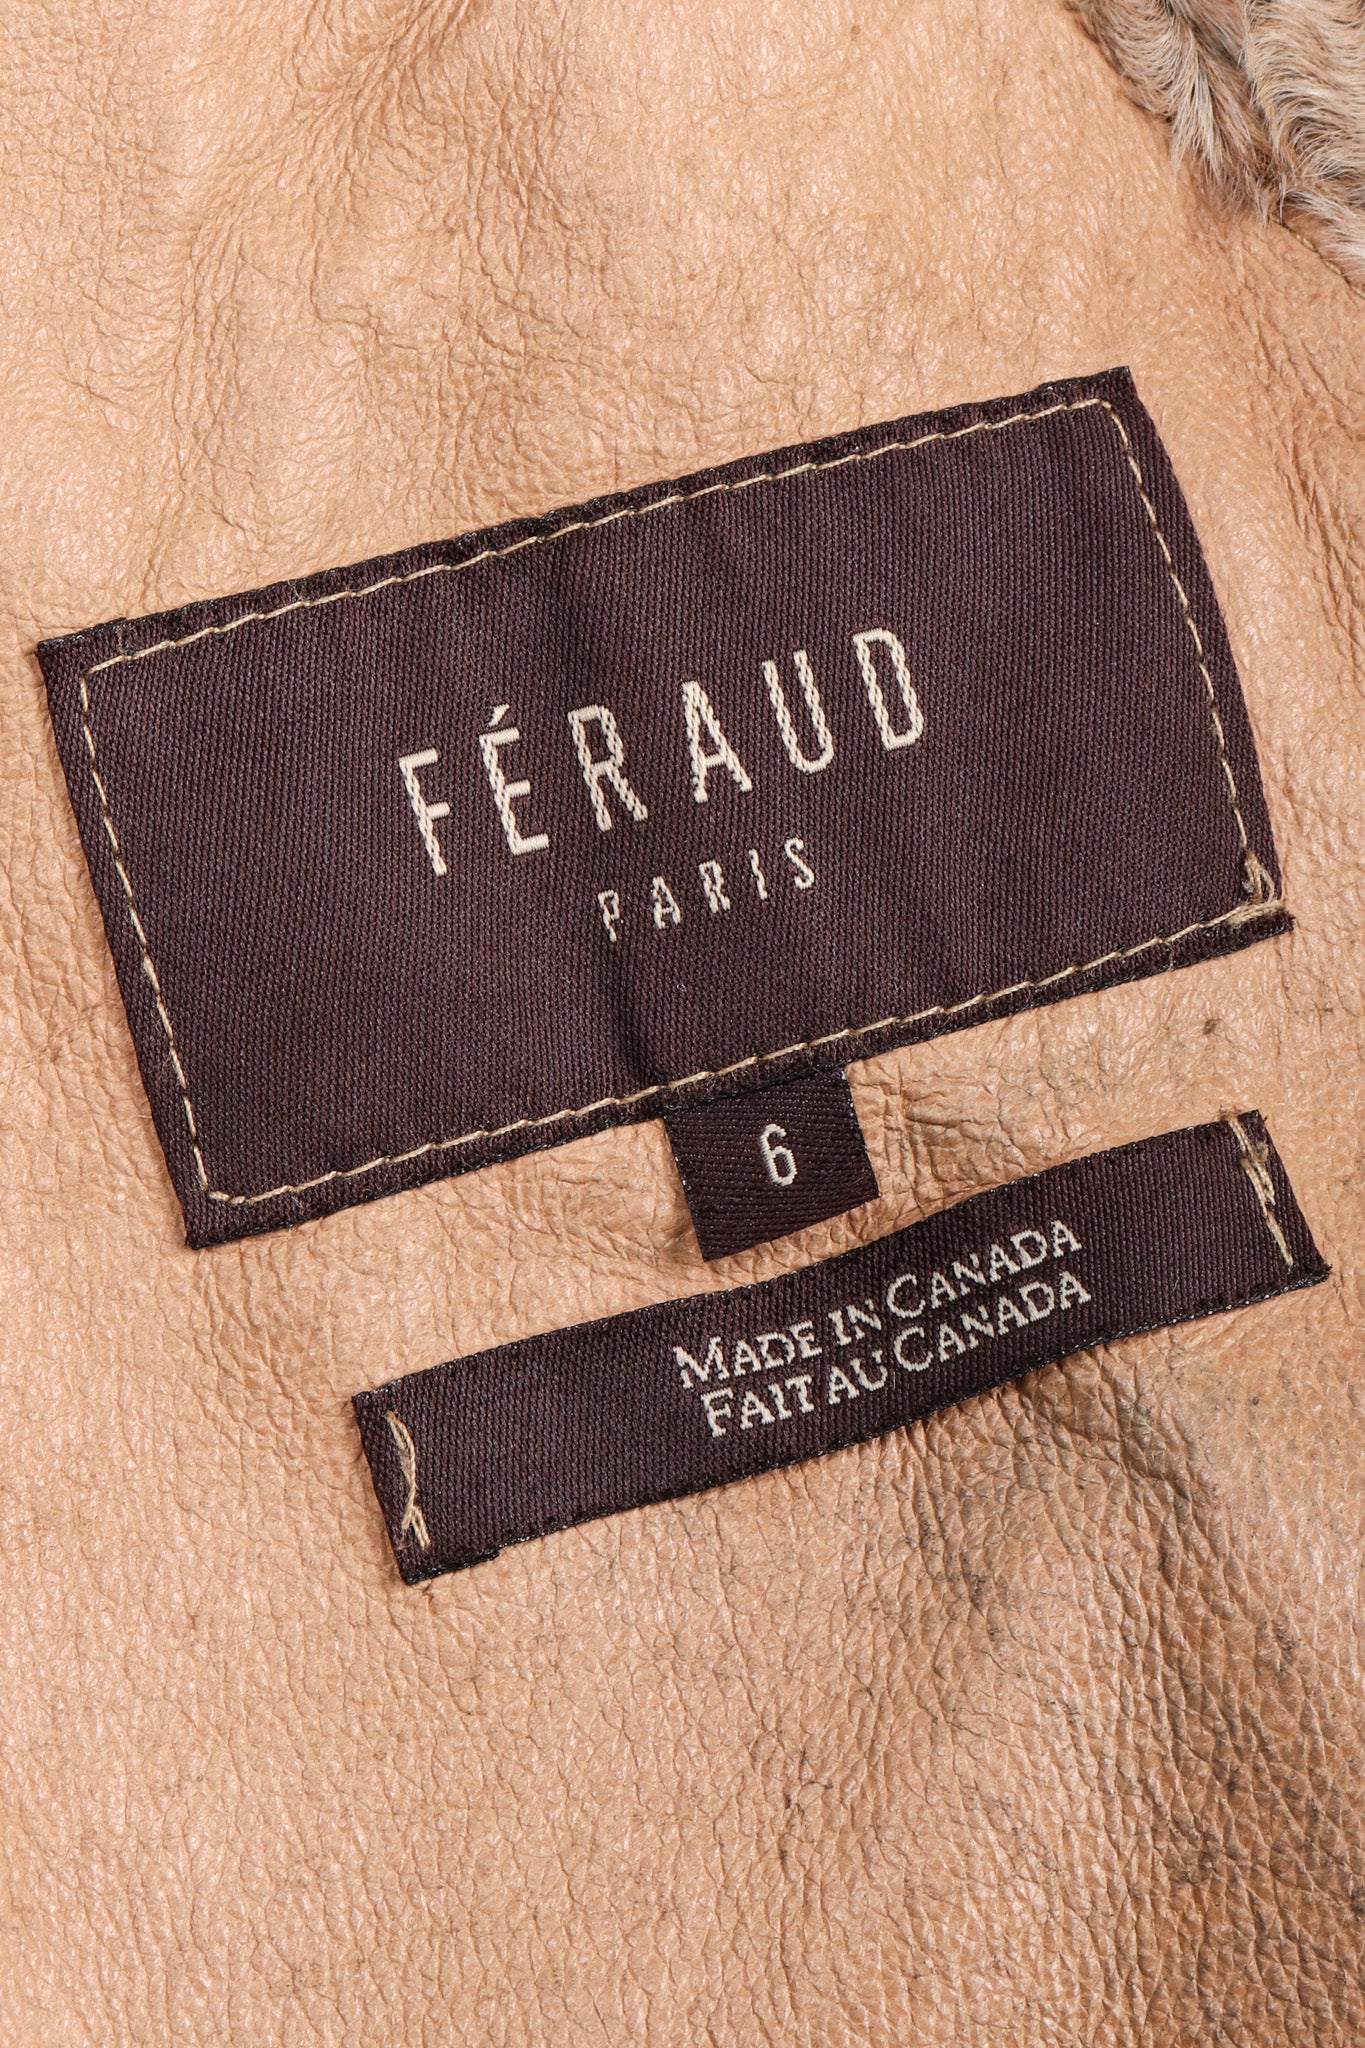 Recess Los Angeles Vintage Louis Feraud Shearling Persian Lamb Fur Coat